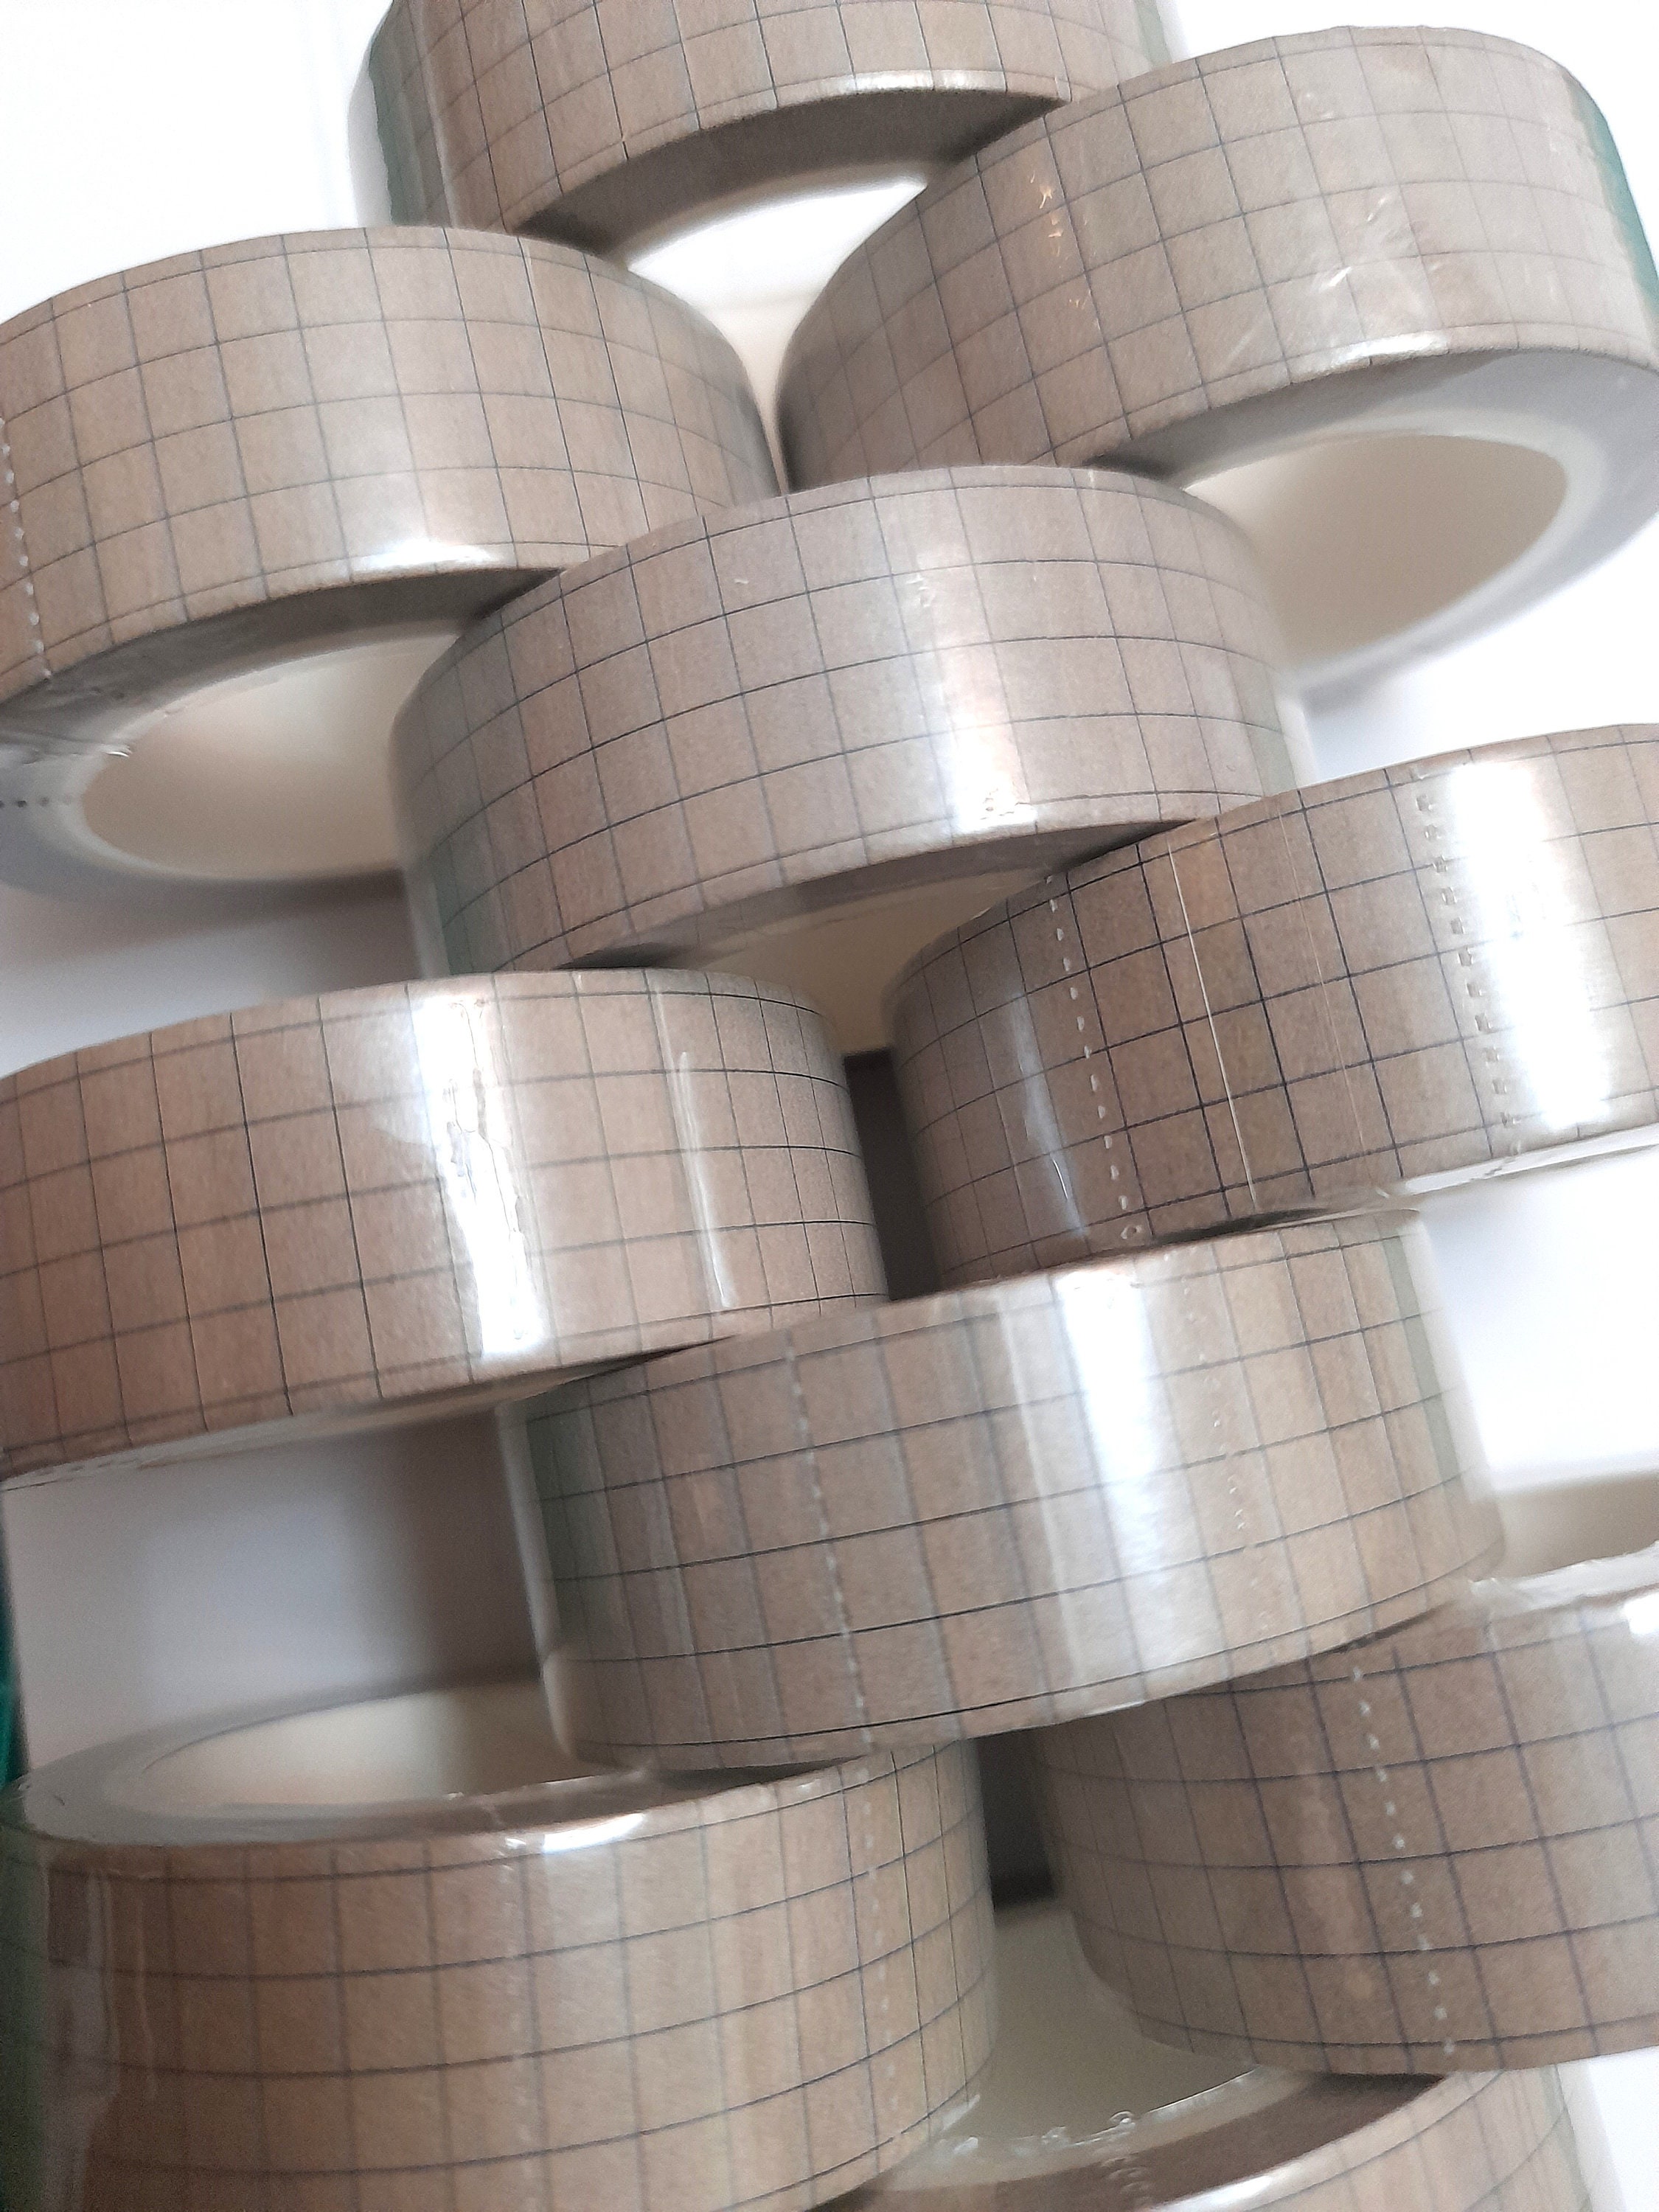 Kraft Paper Tapes Grid, Dots, Script Masking Tape Roll for Paper